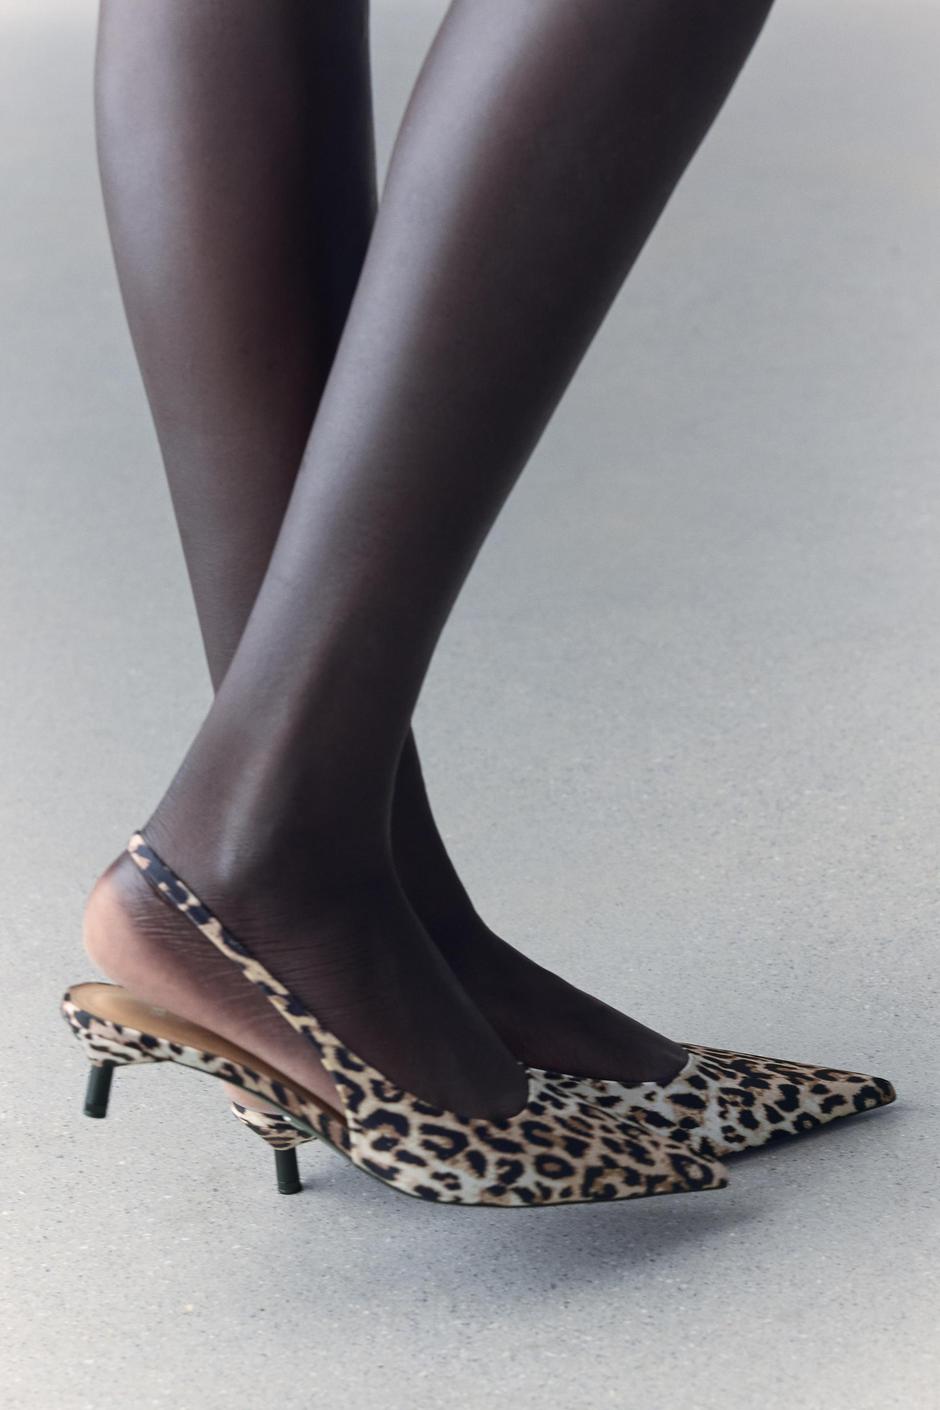 Foto: Zara, cipele s leopard uzorkom (35,95 eura) | Autor: 